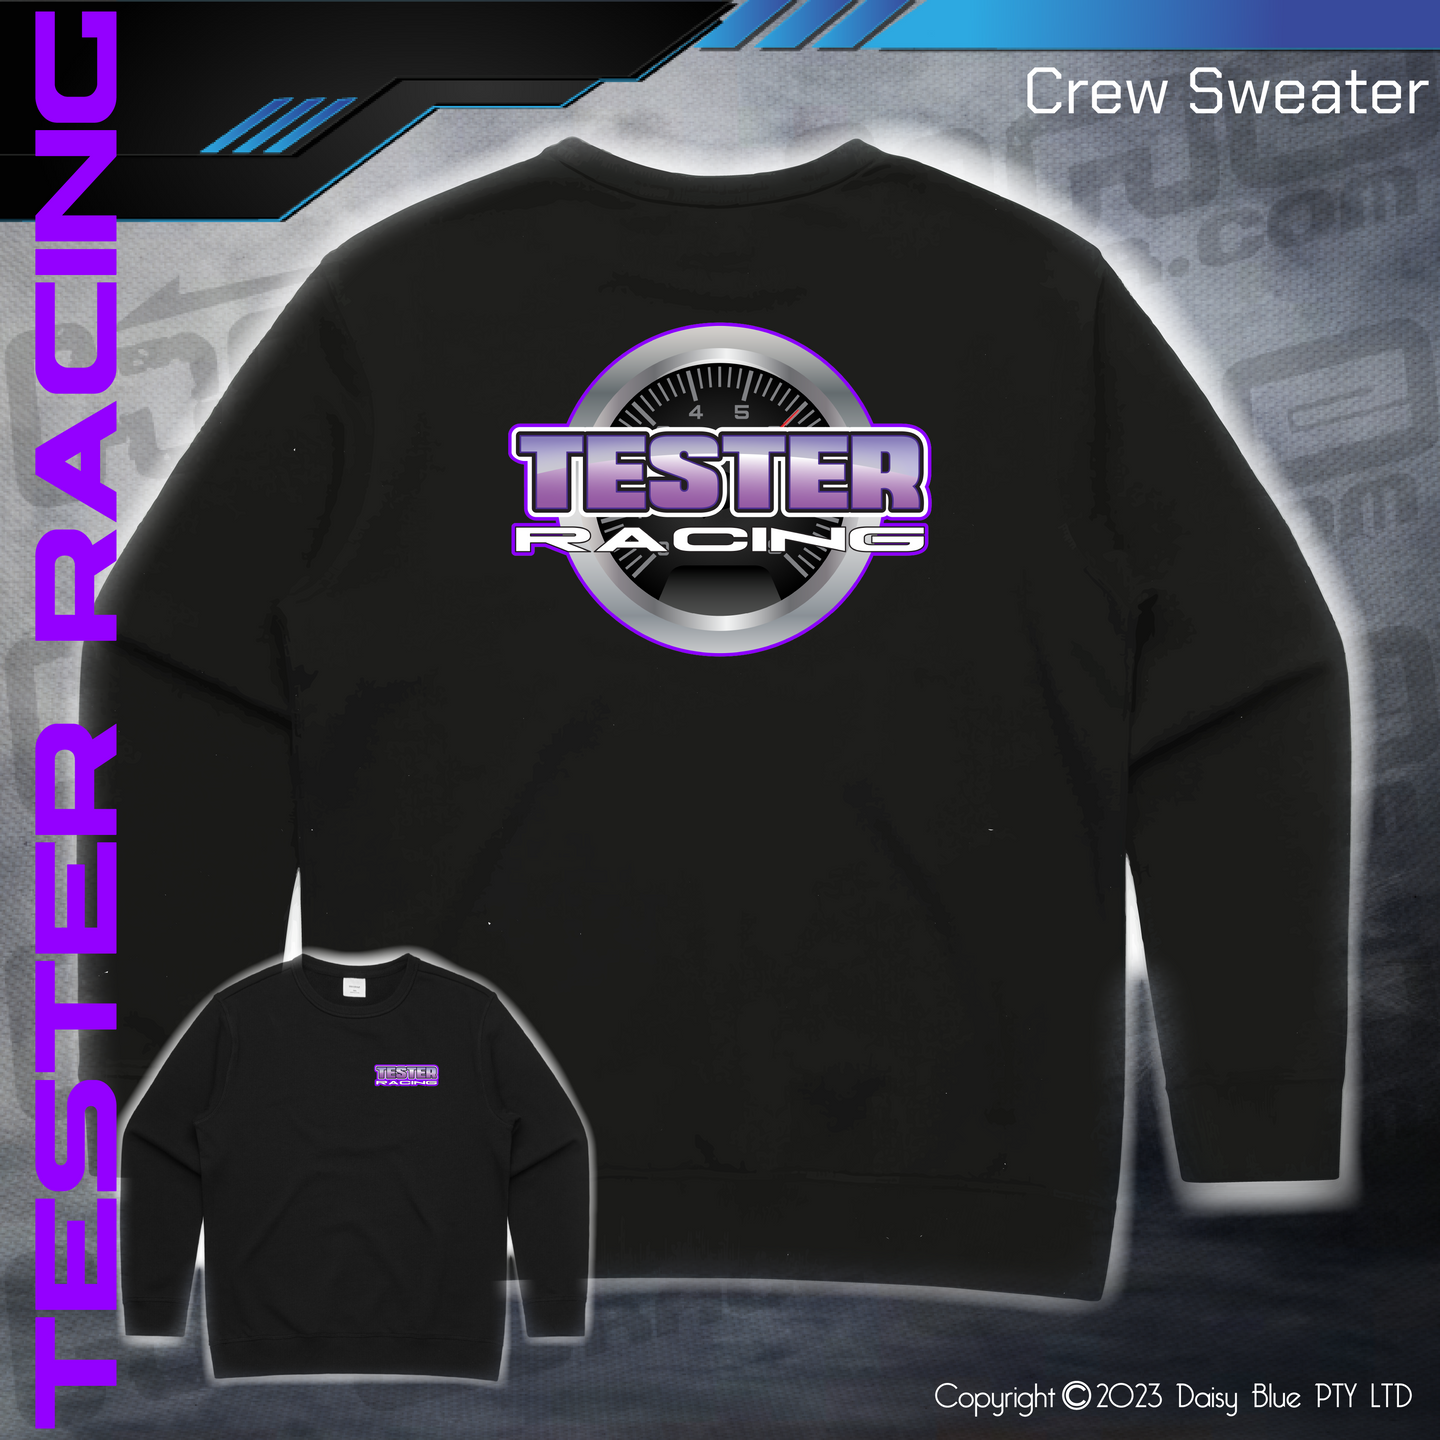 Crew Sweater - Tester Racing